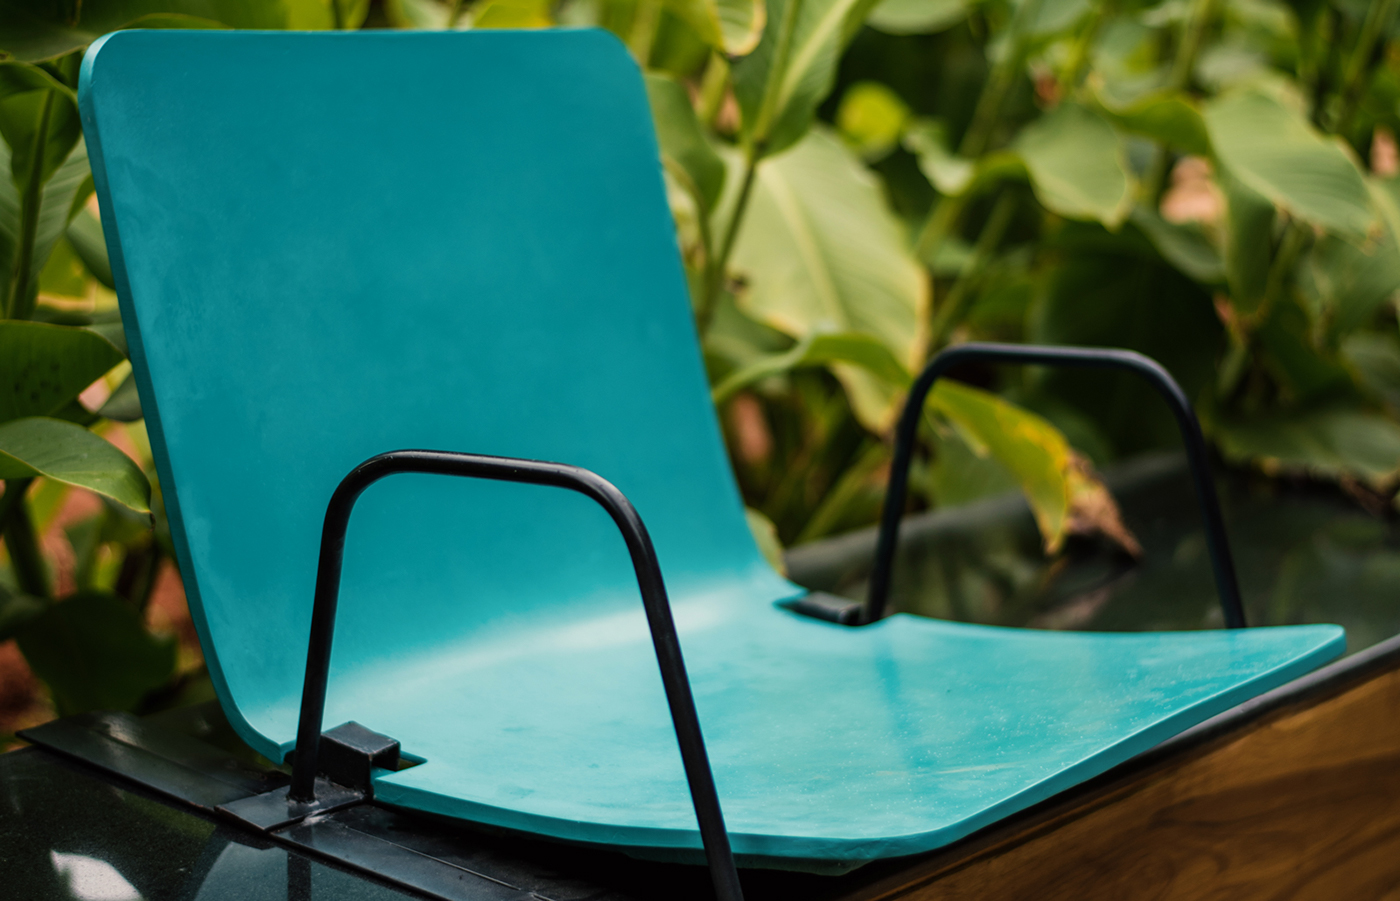 rocking chair chair outdoor furniture furniture Innovative children user friendly creative furniture design 